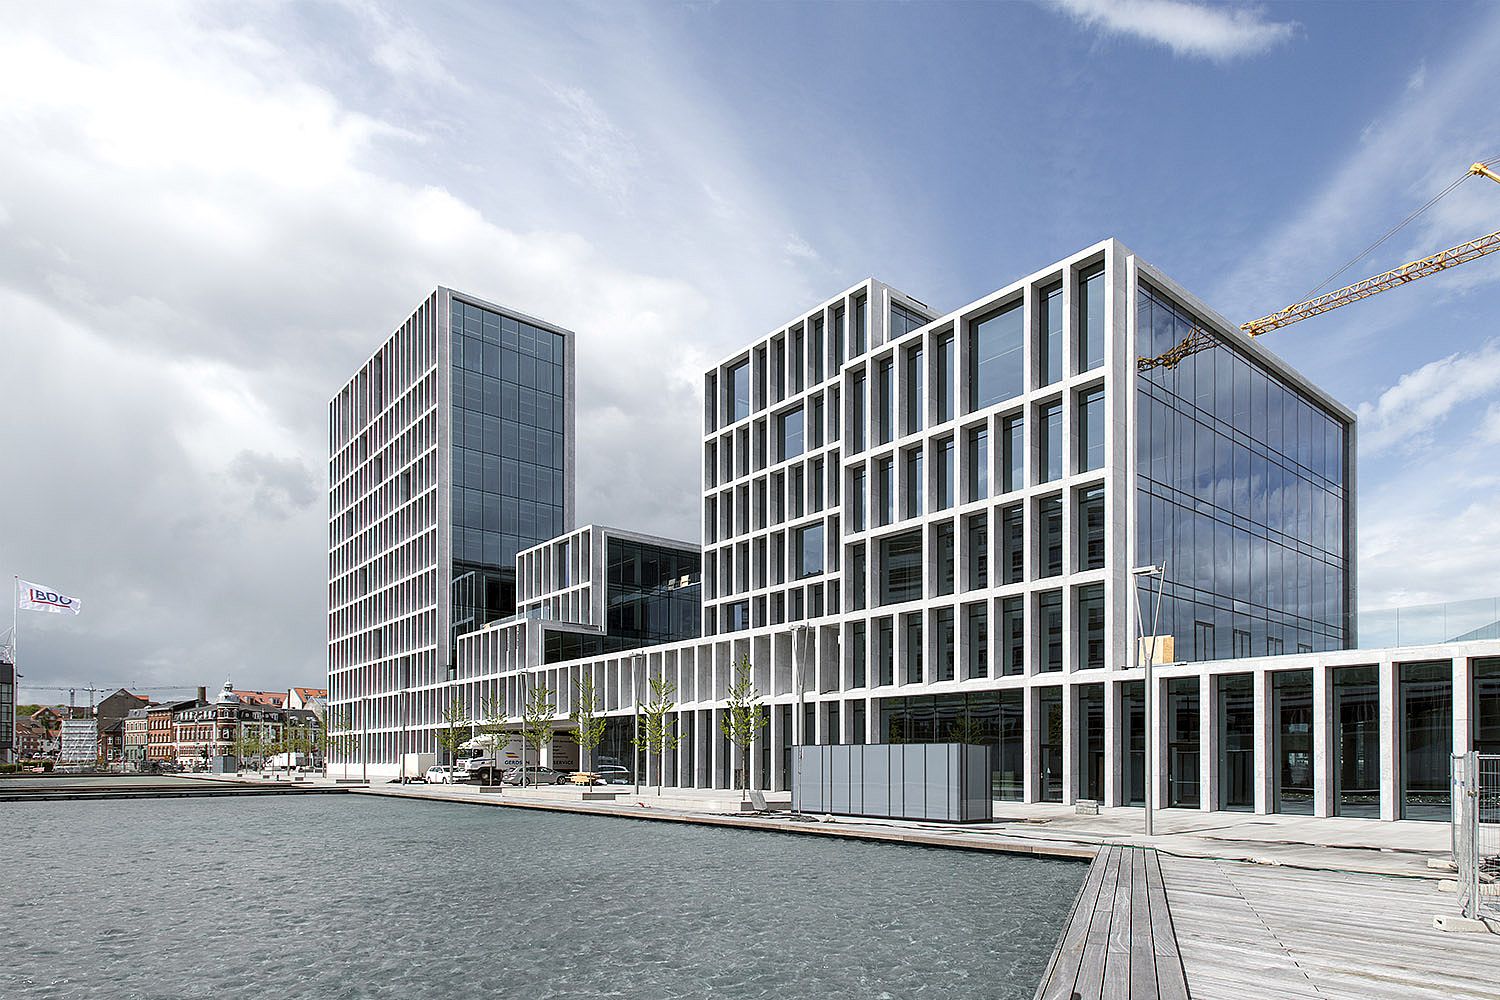 BESTSELLER'S NEW OFFICES ON THE AARHUS WATERFRONT - C.F. Møller